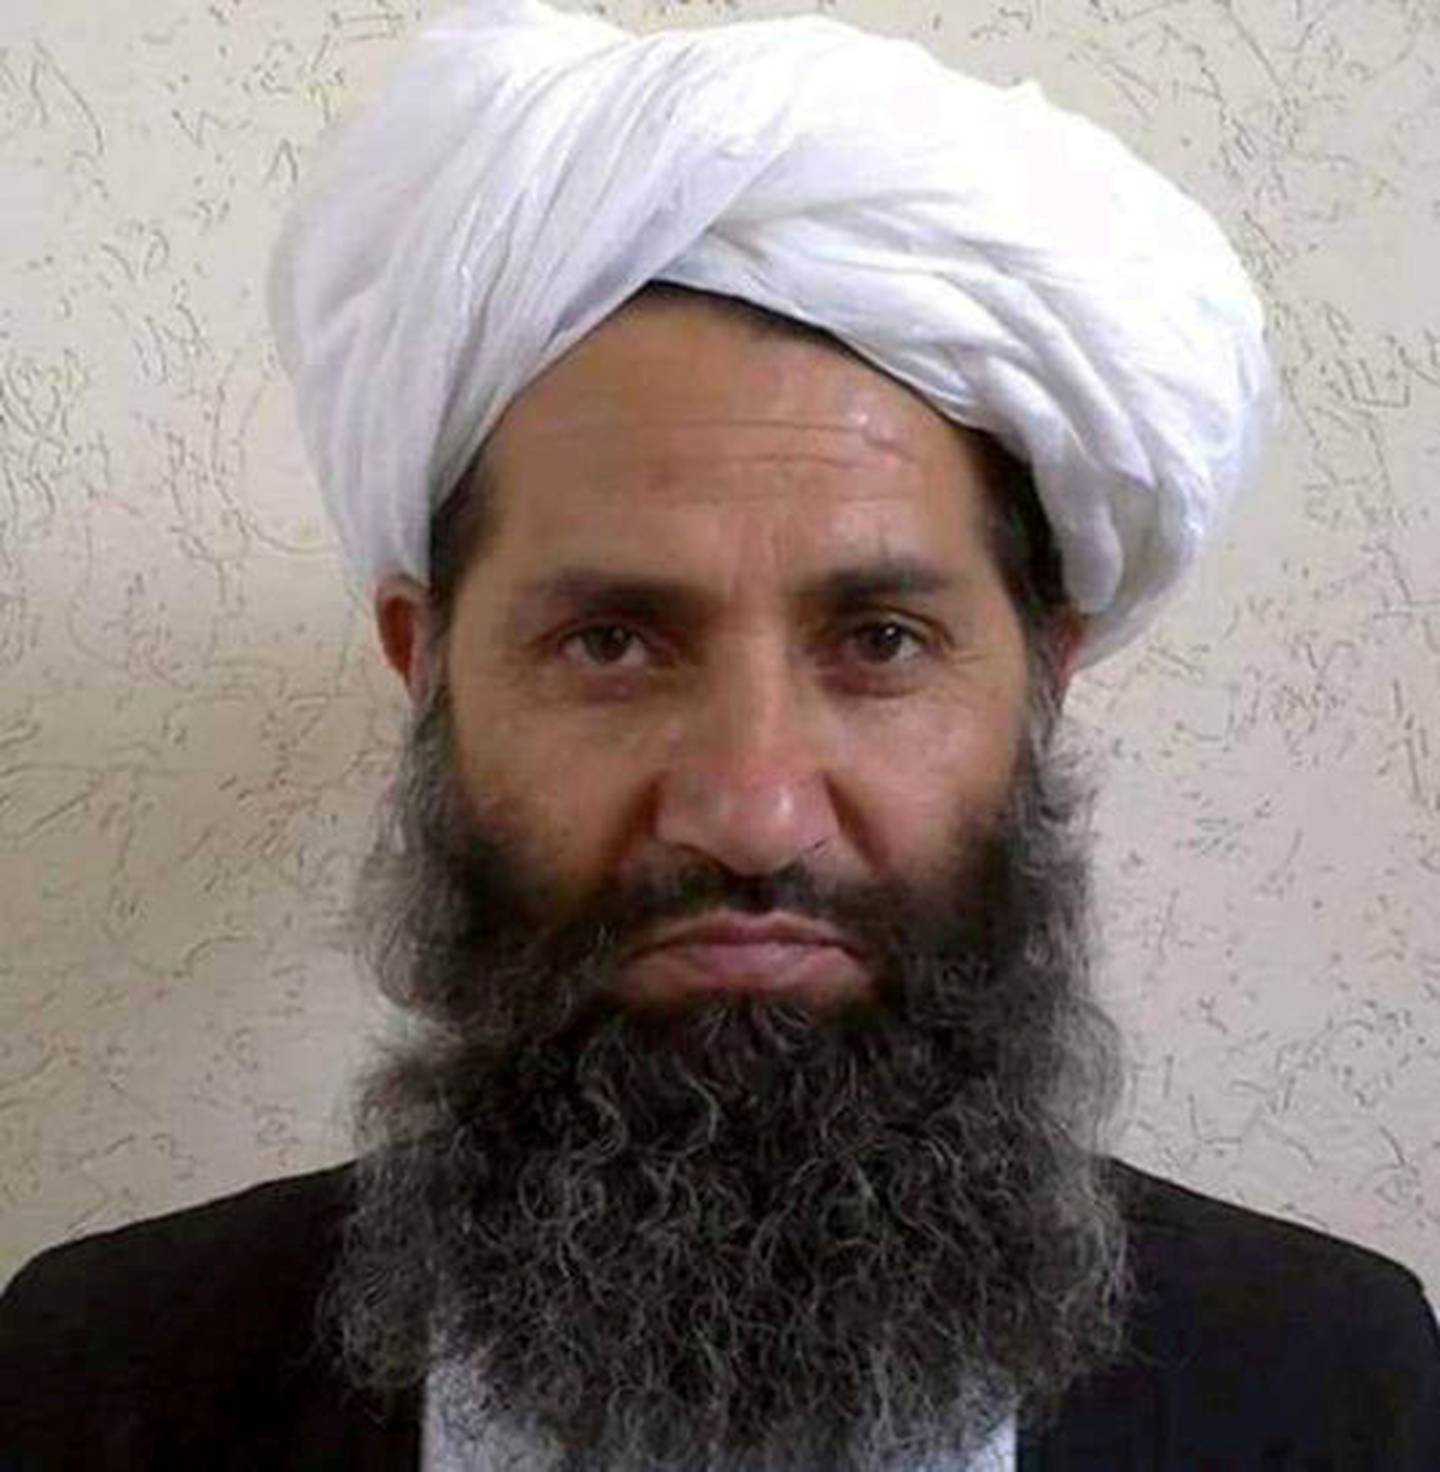 Taliban leader Mawlawi Akhundzada makes first public appearance